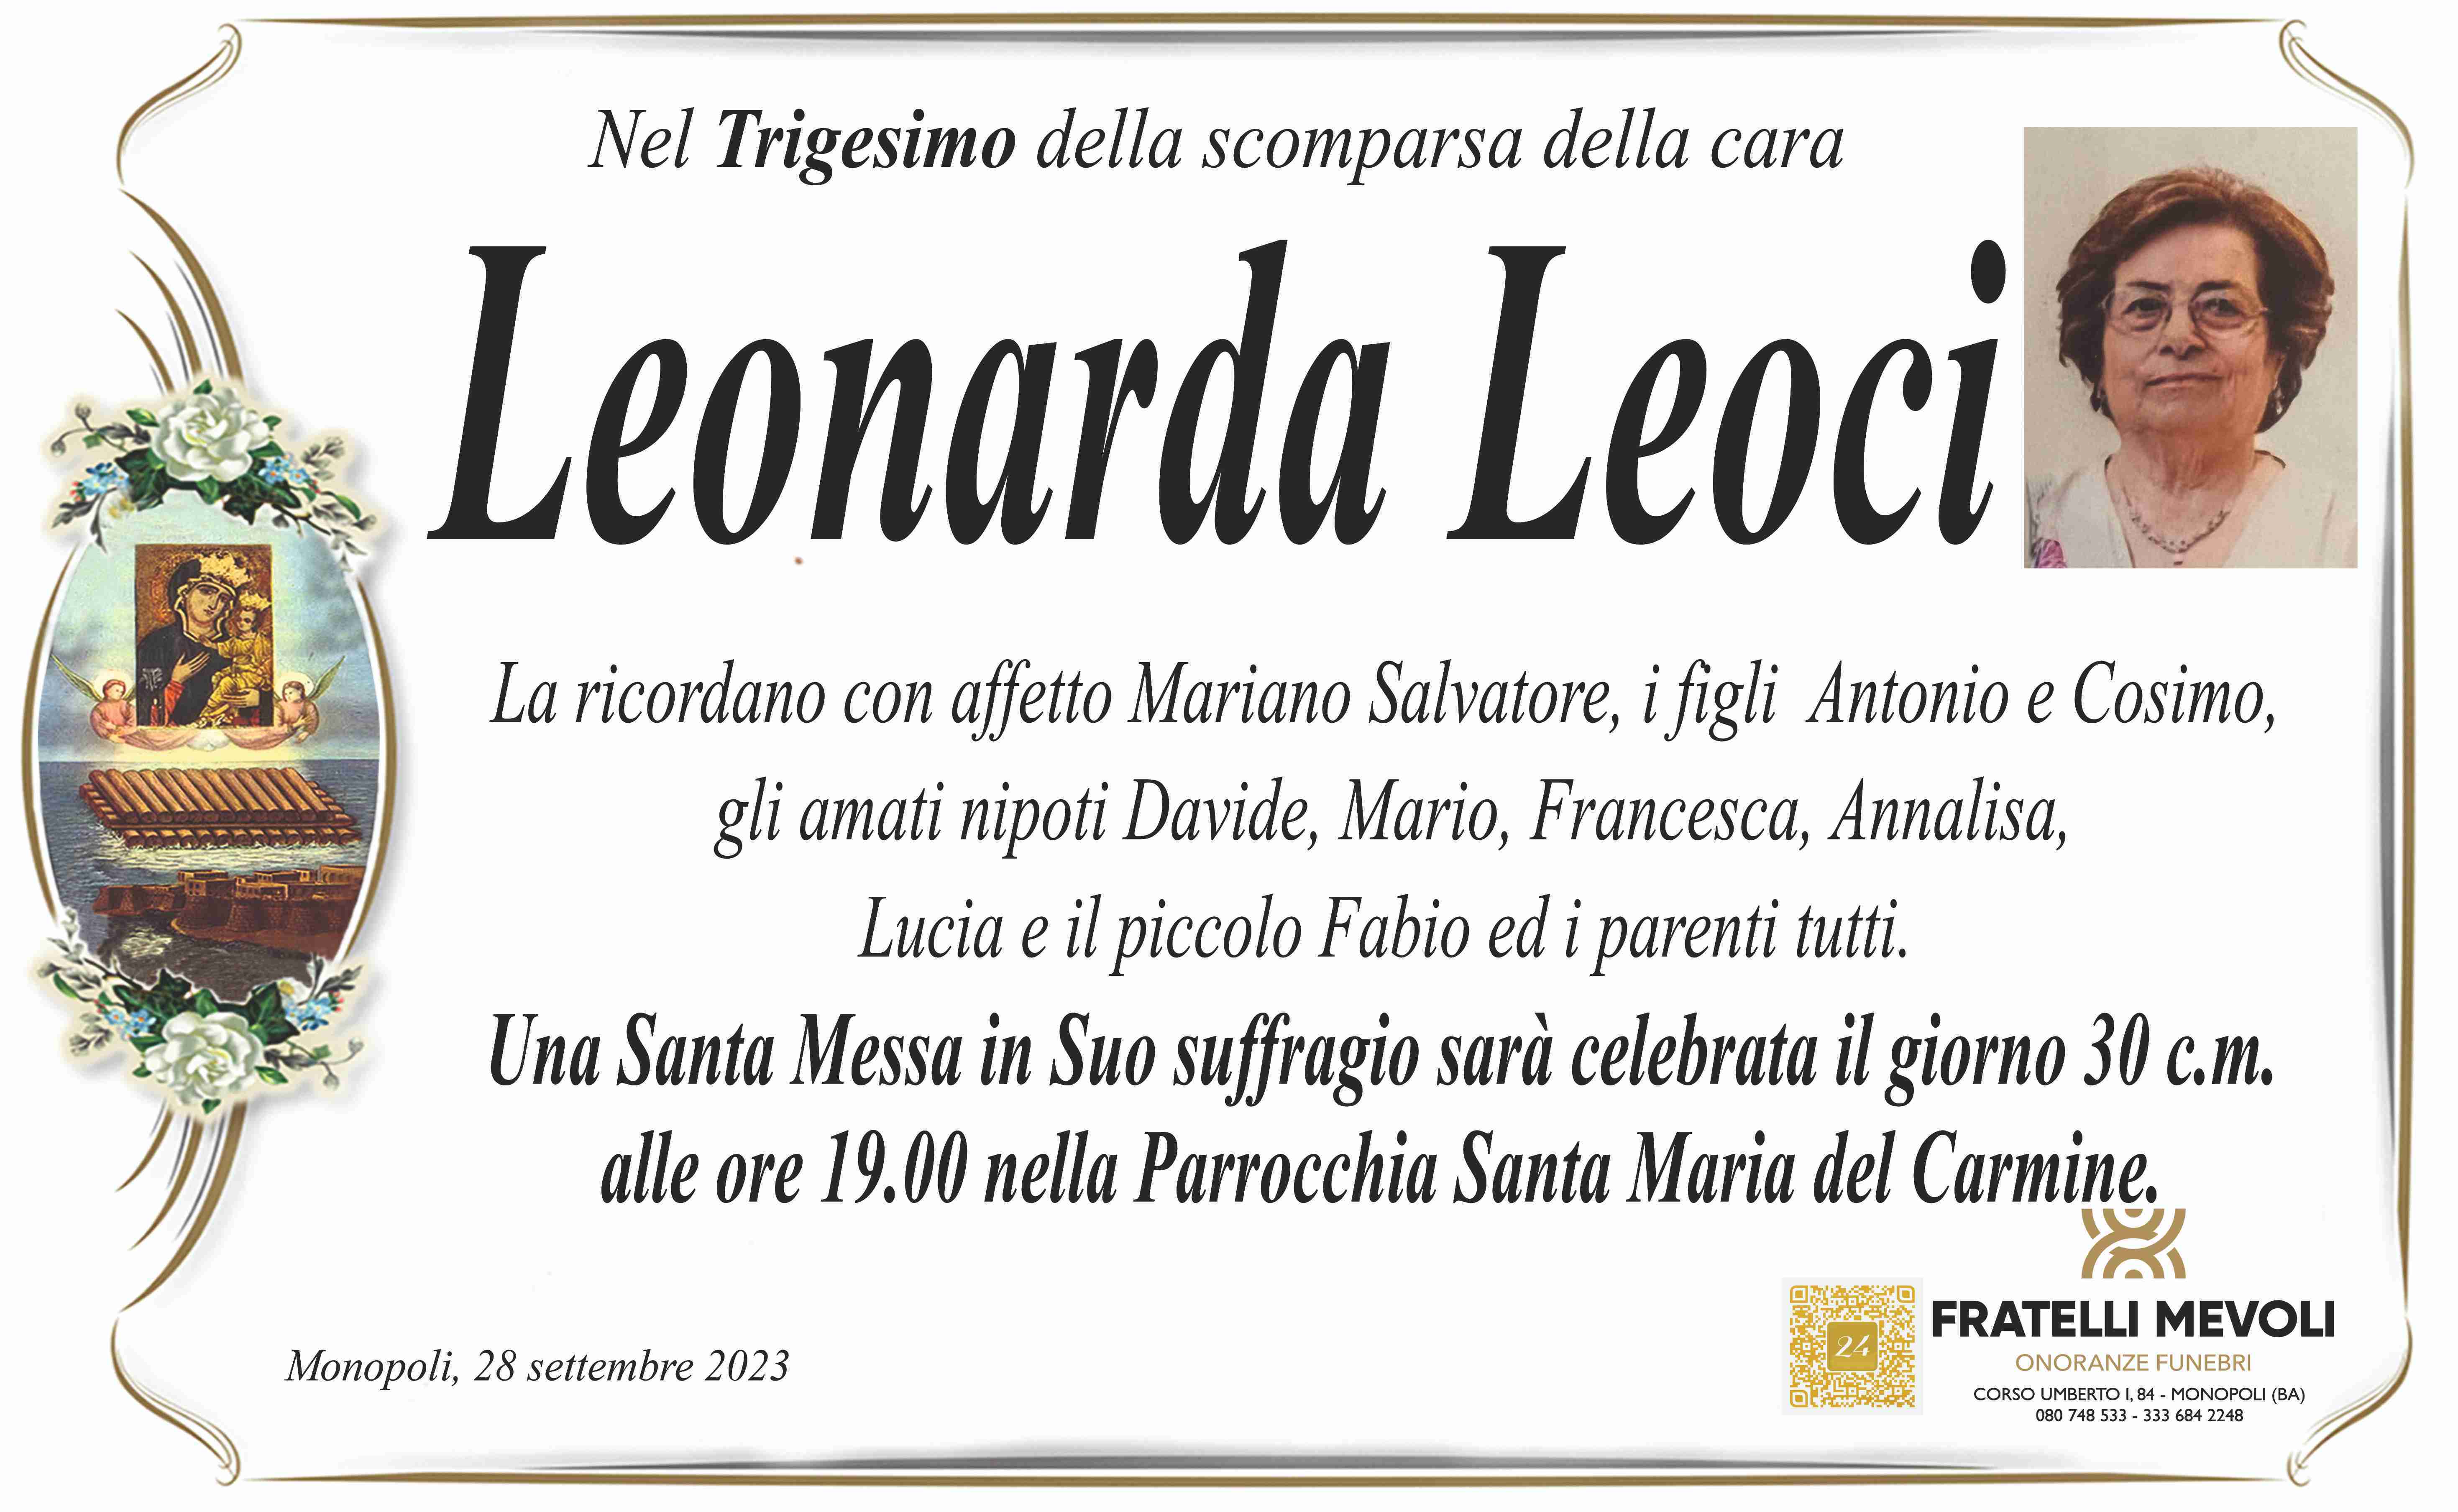 Leonarda Leoci